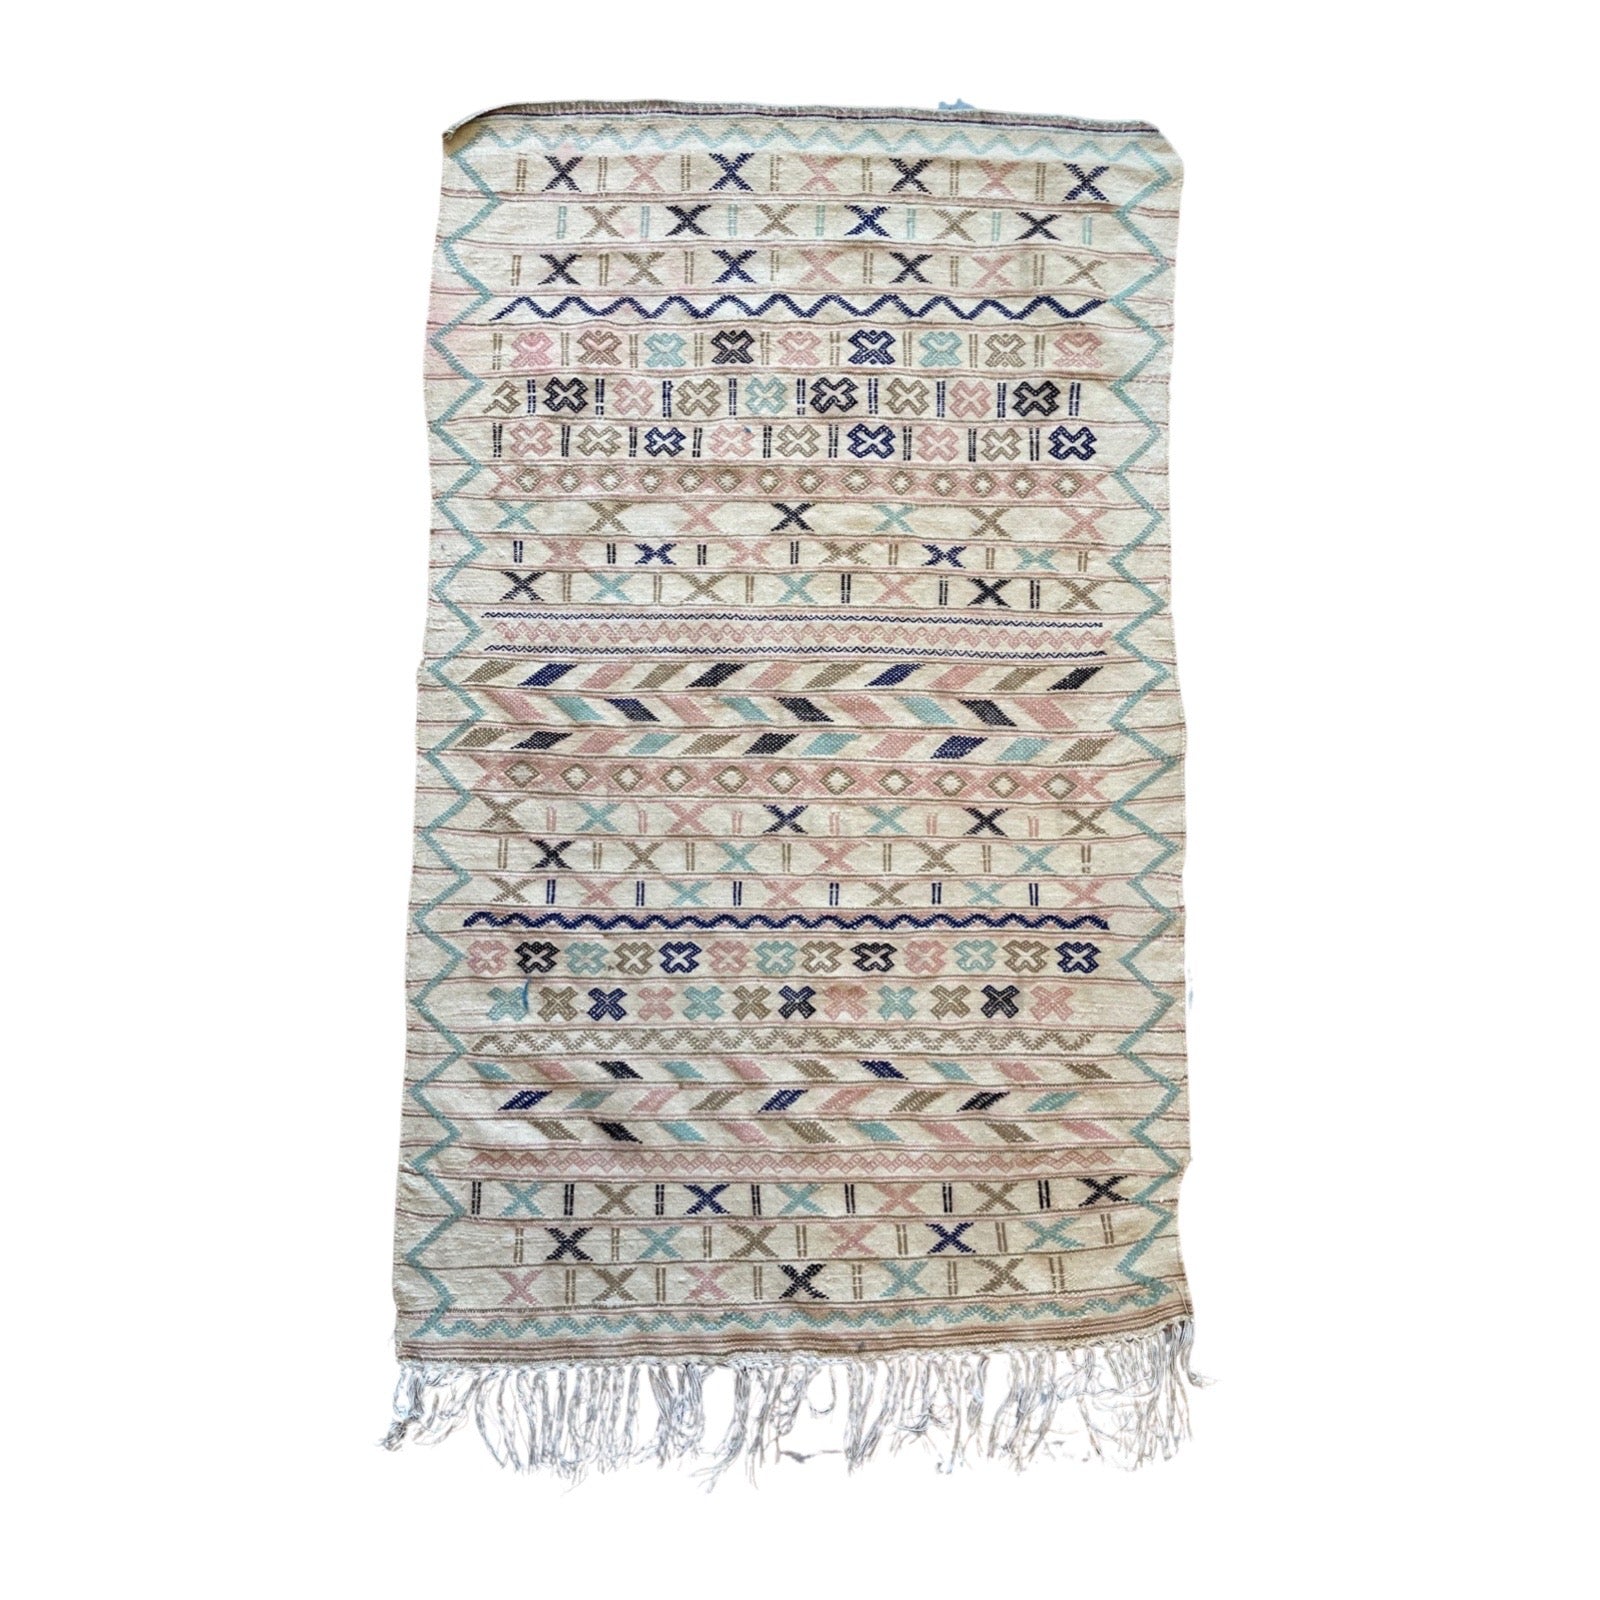 White, pink, and blue vintage Moroccan flatweave rug - Kantara | Moroccan Rugs